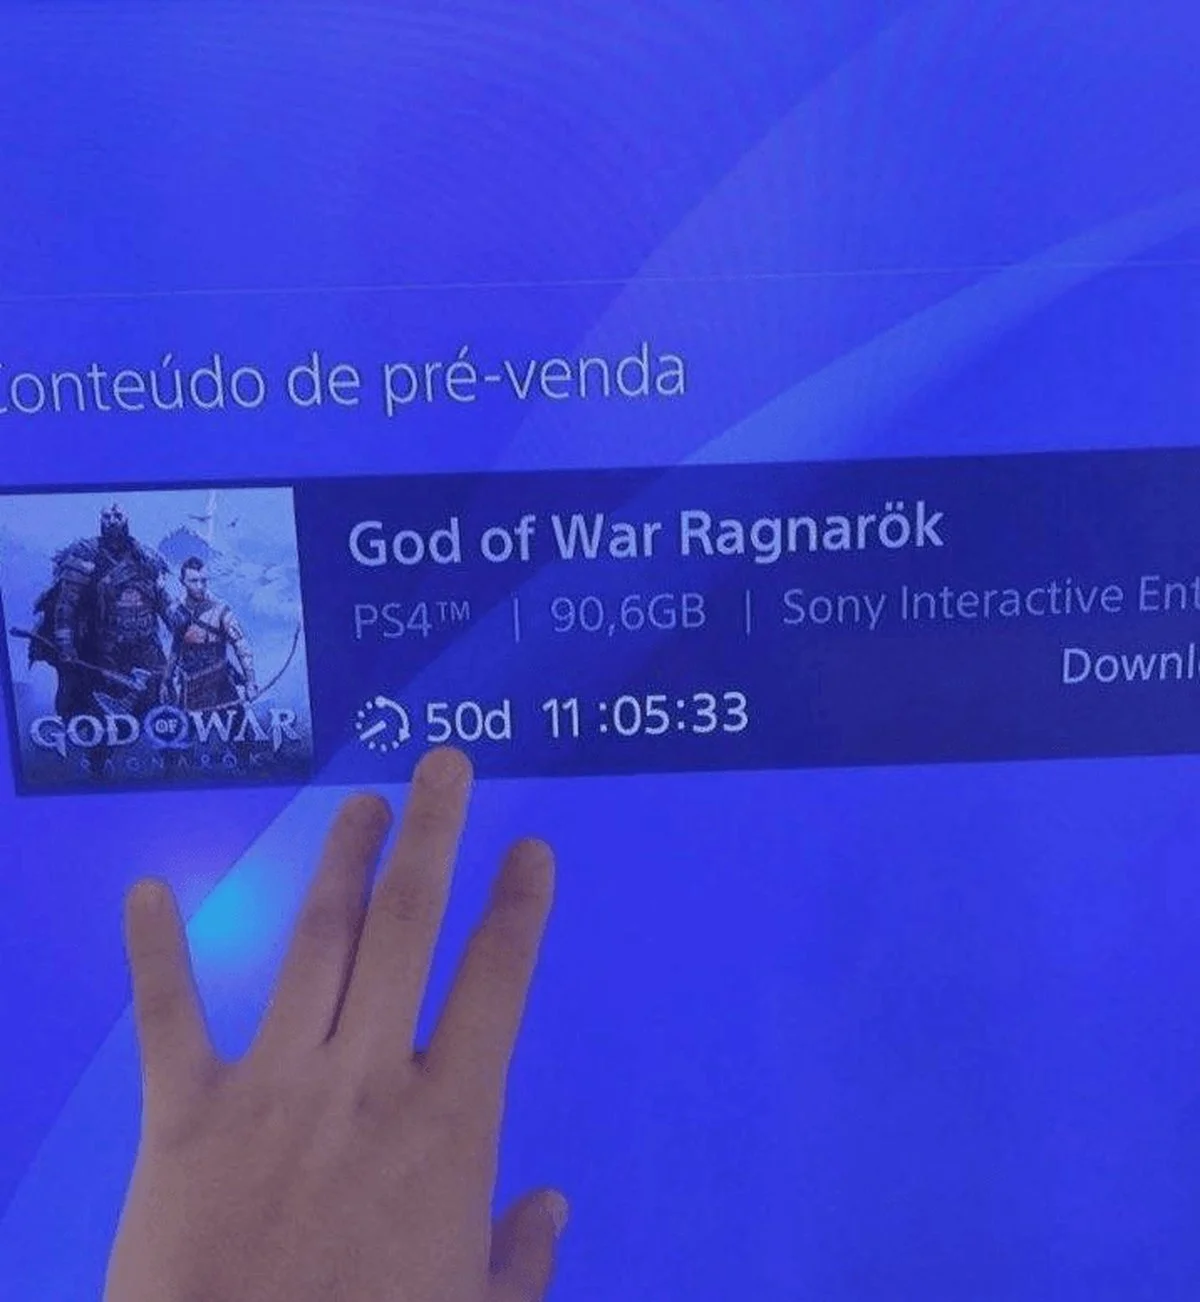 God of War Ragnarok займёт на PS4 почти 91 ГБ - фото 1